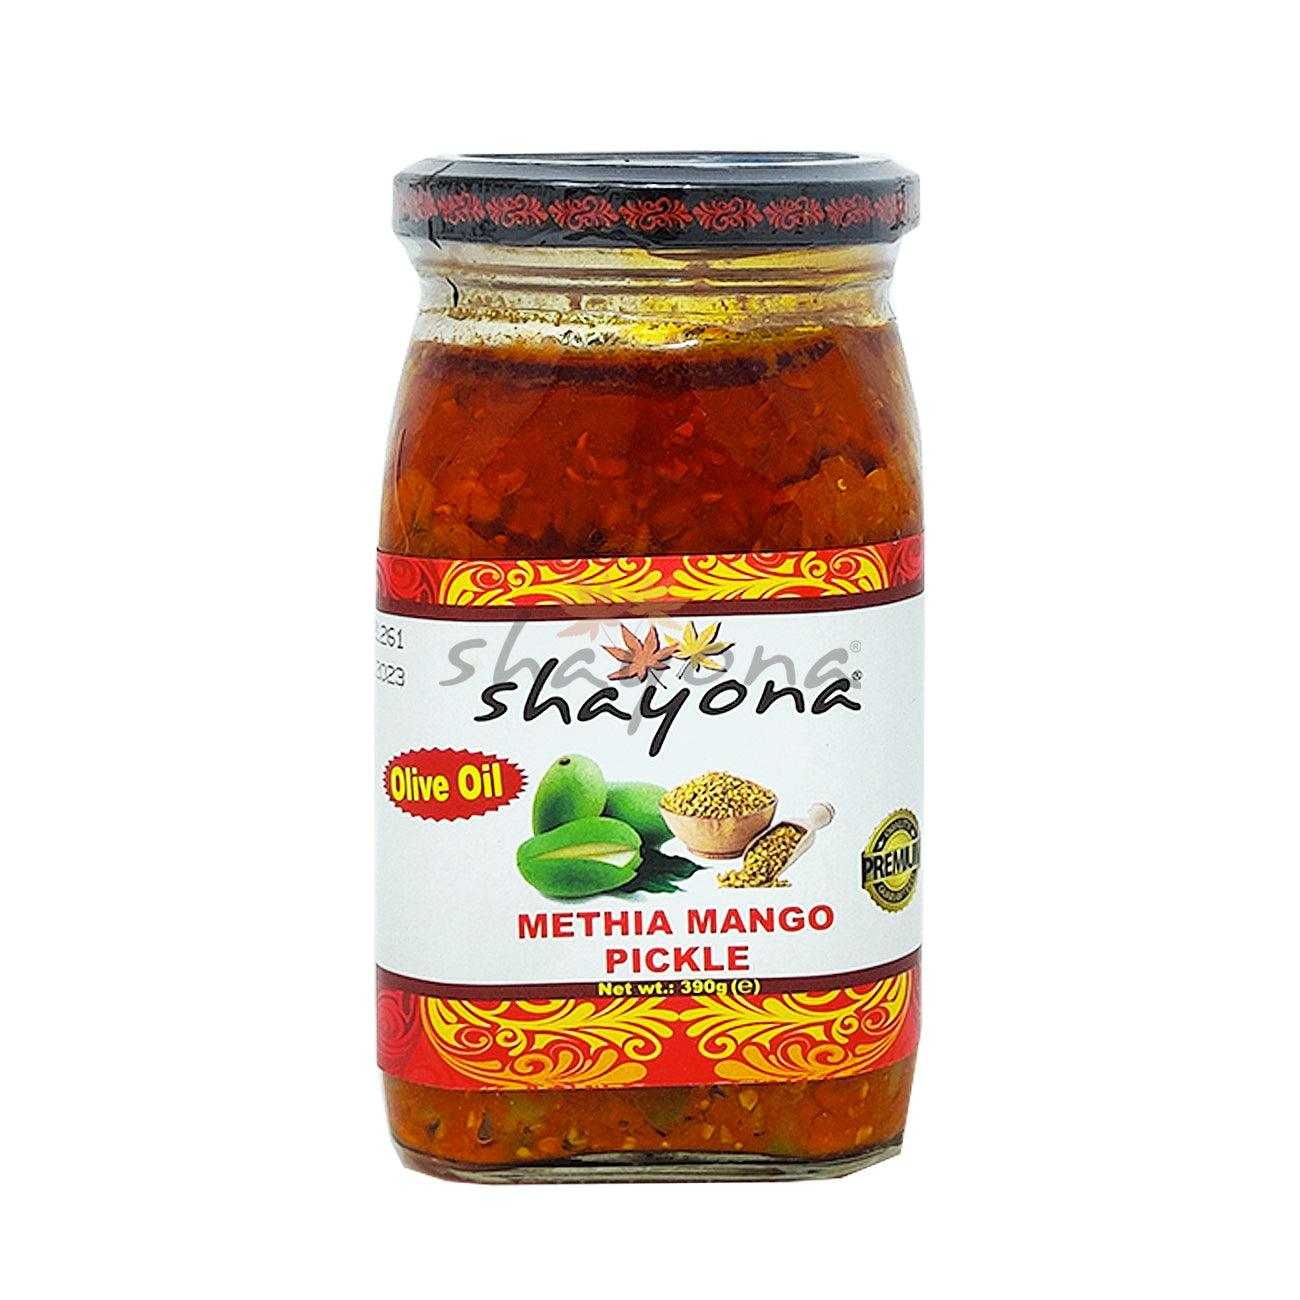 Shayona Methia Mango Pickle Olive Oil